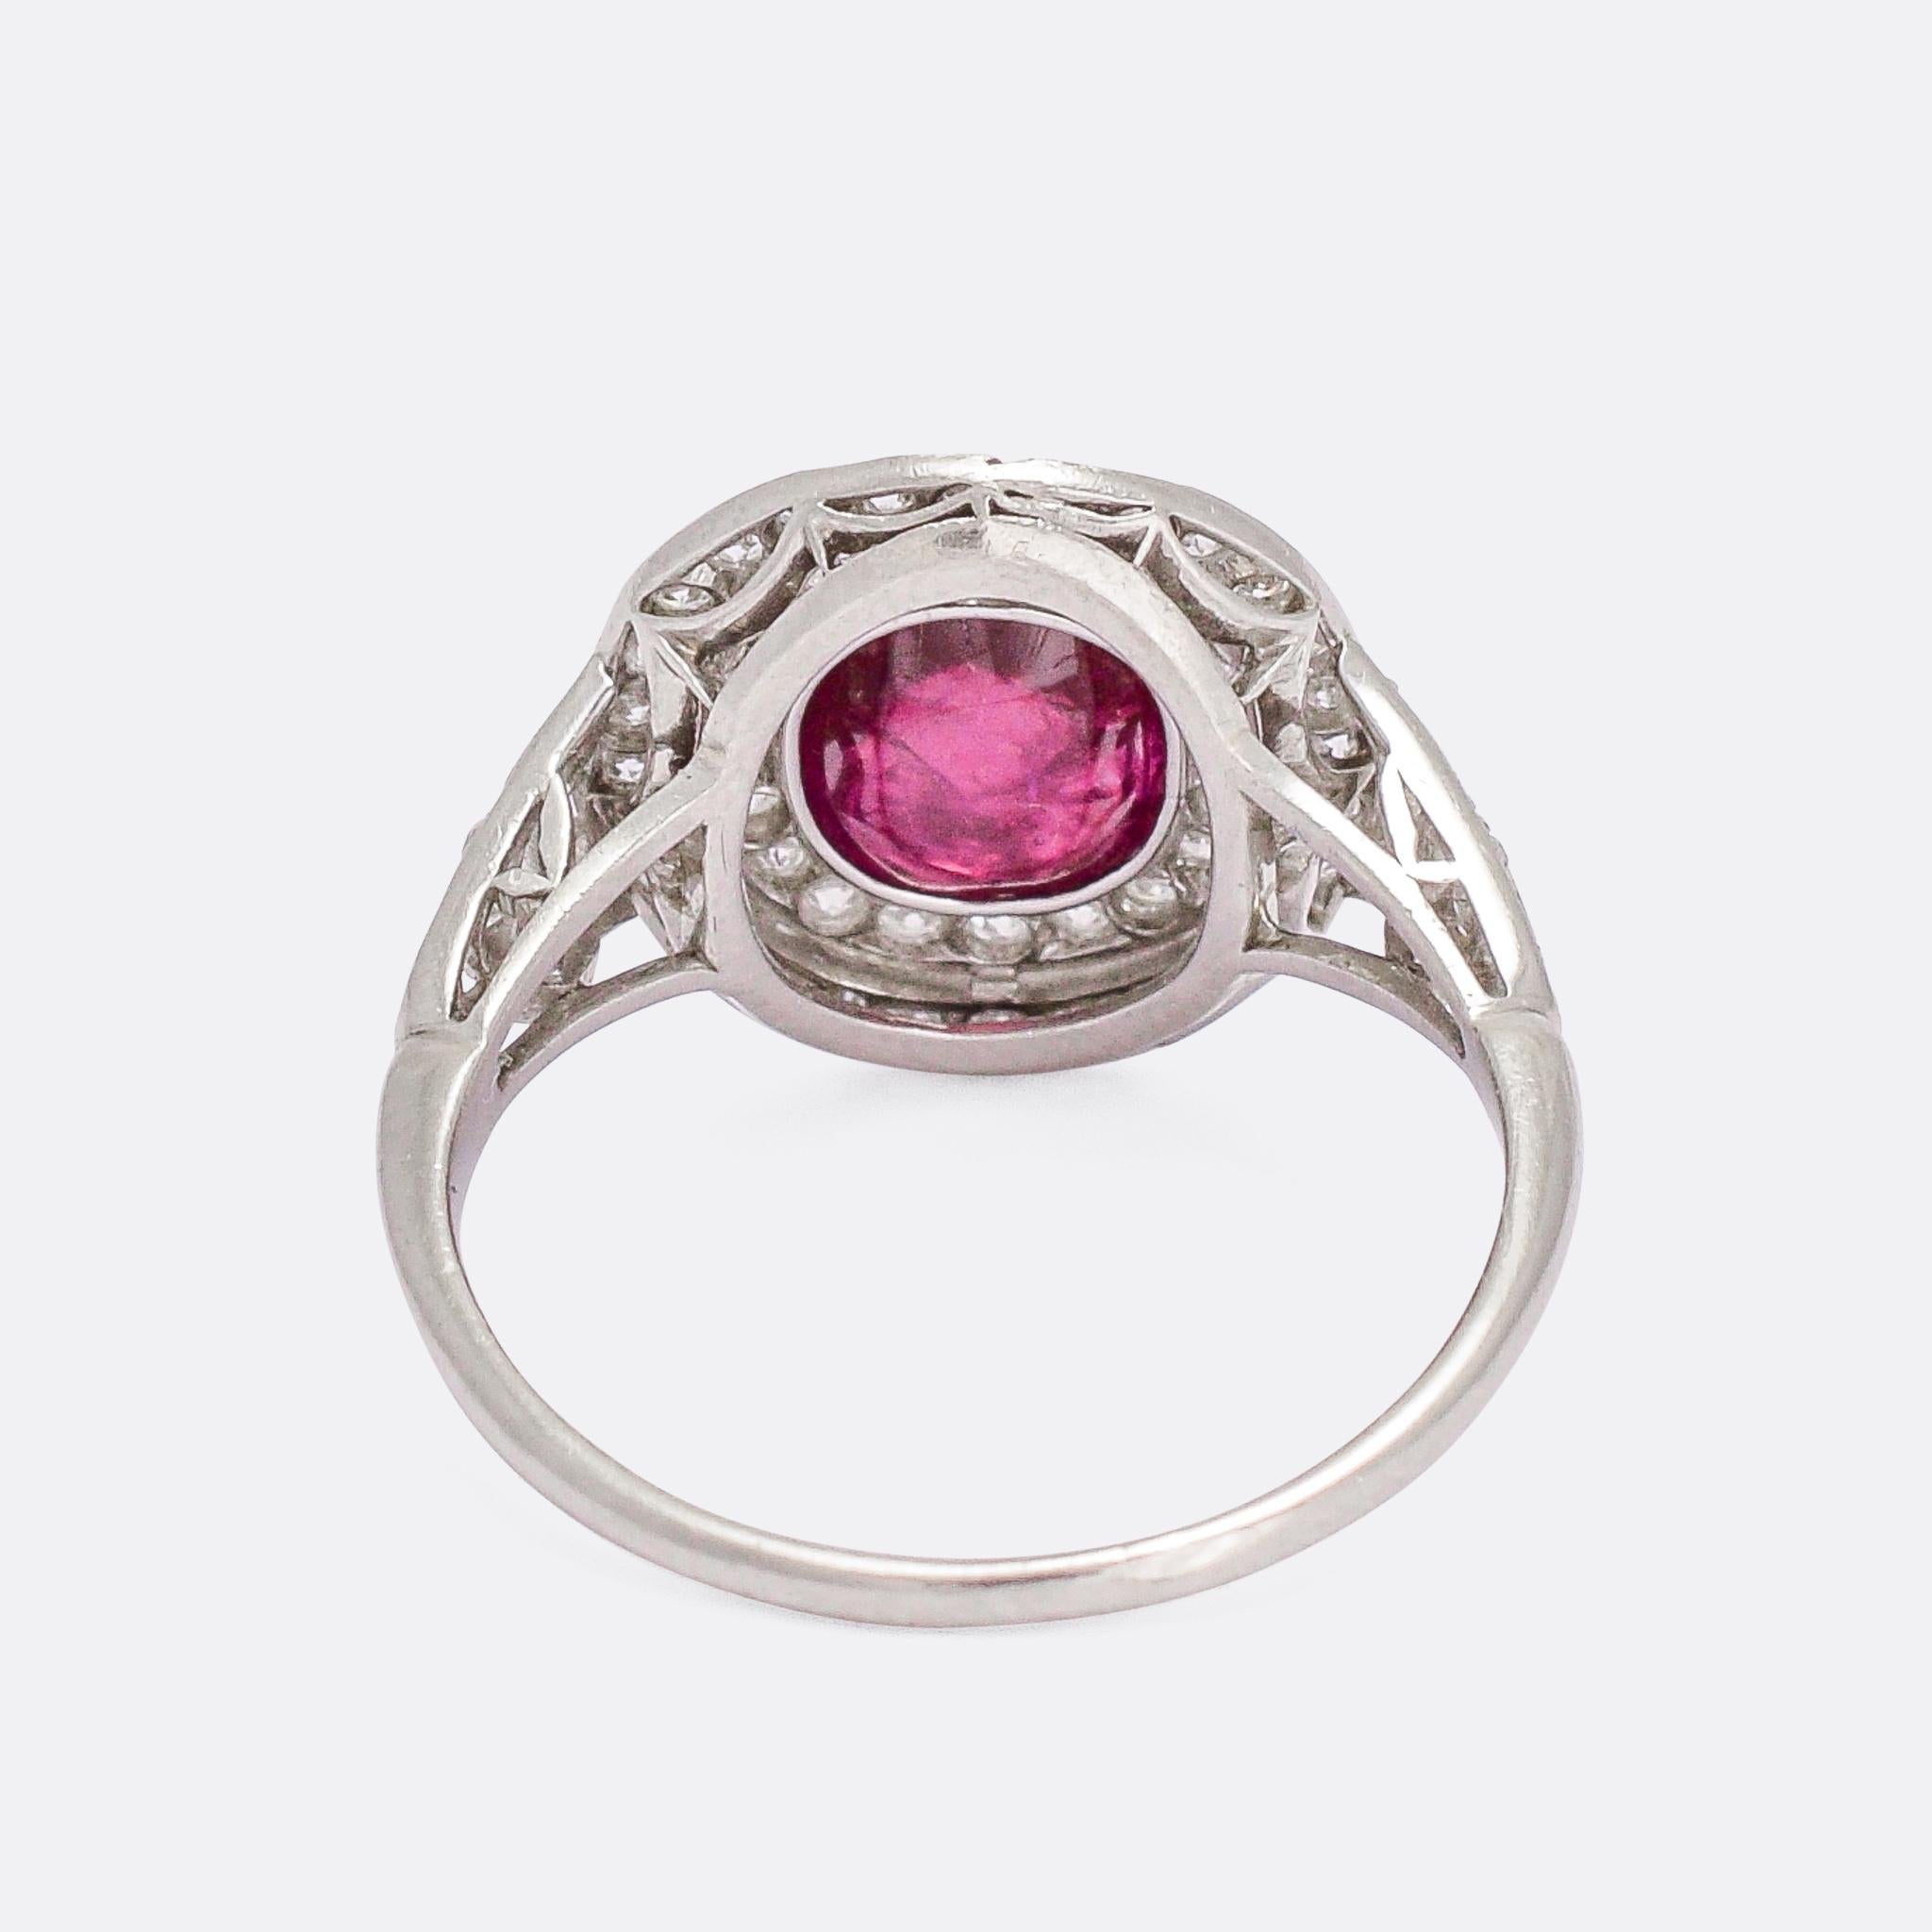 Women's Art Deco Cabochon Burma Ruby Diamond Cluster Ring